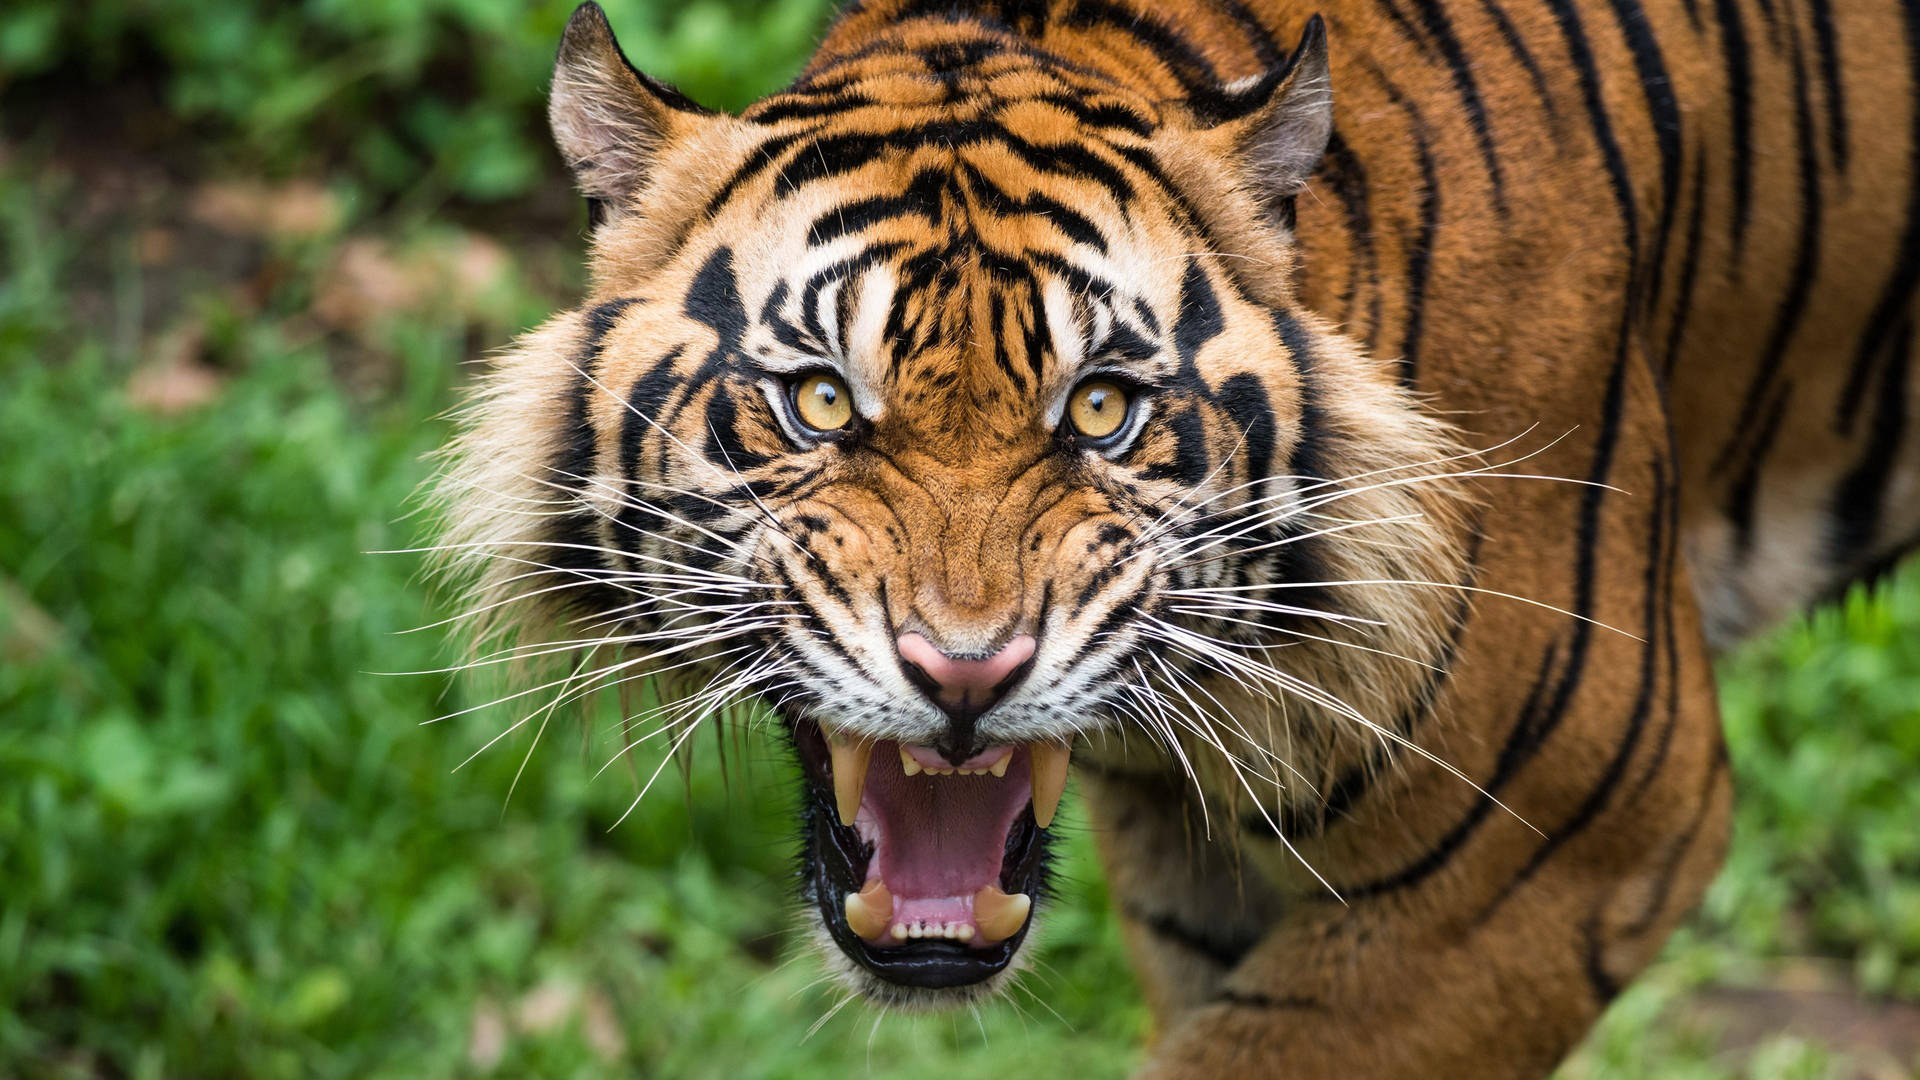 The Majestic Roar of a Tiger Wallpaper